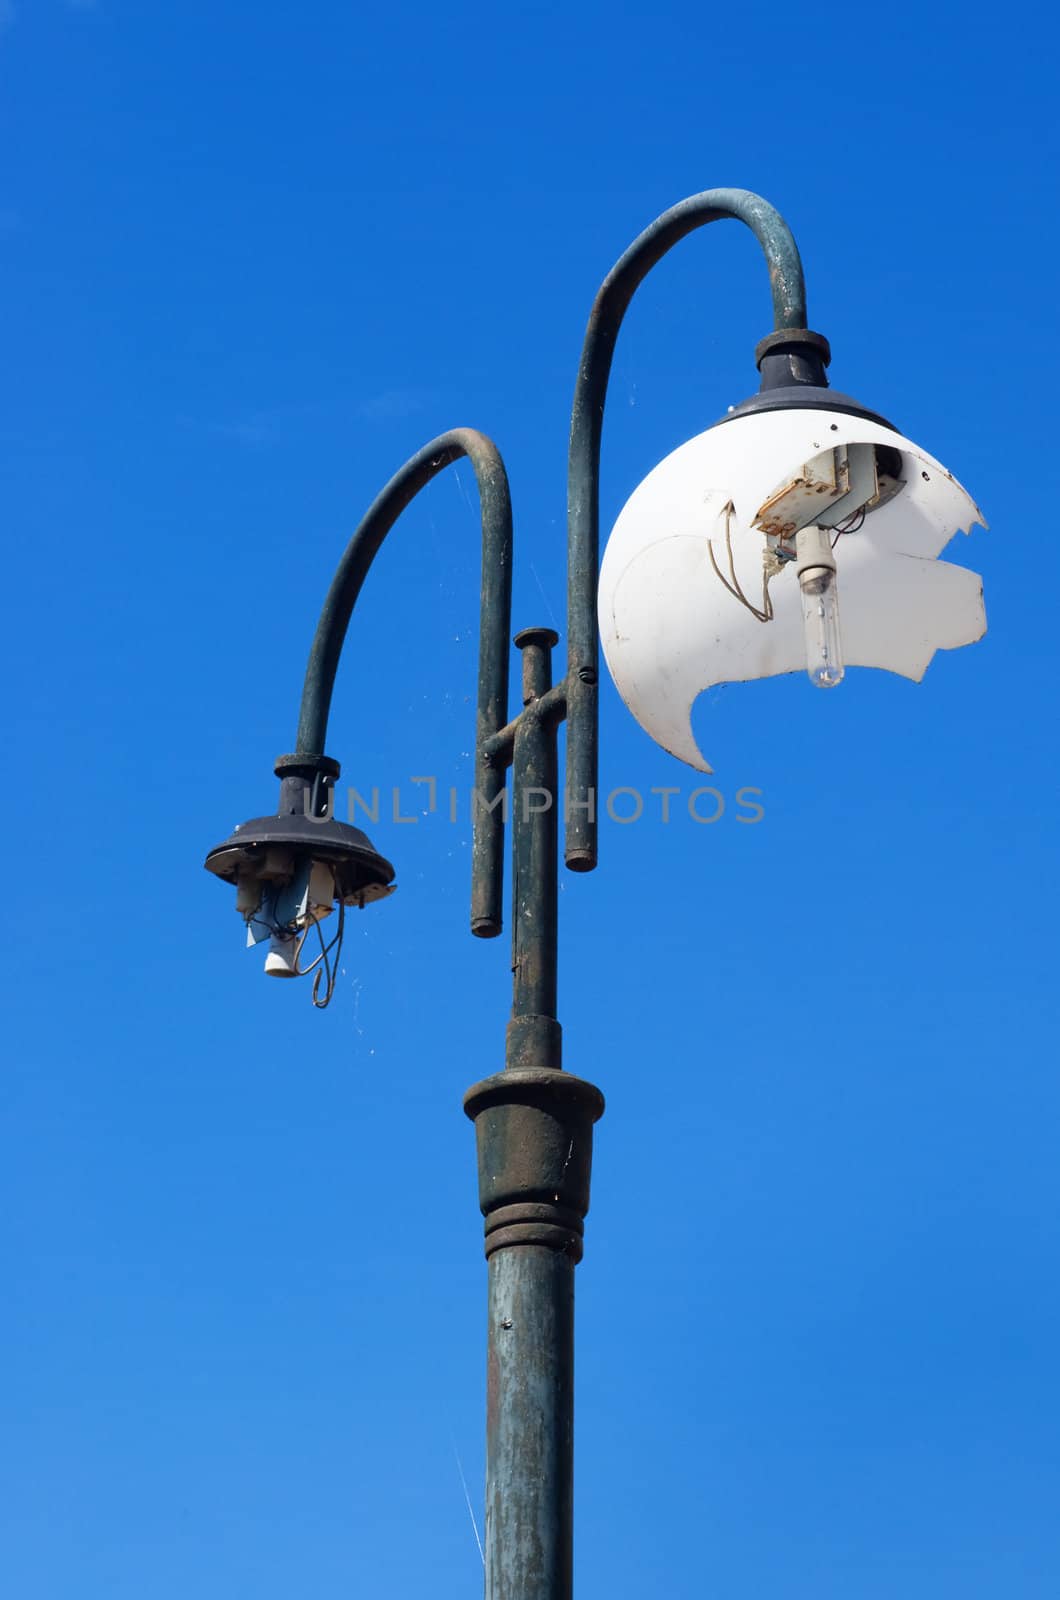 A streetlight still works despite abuse 
